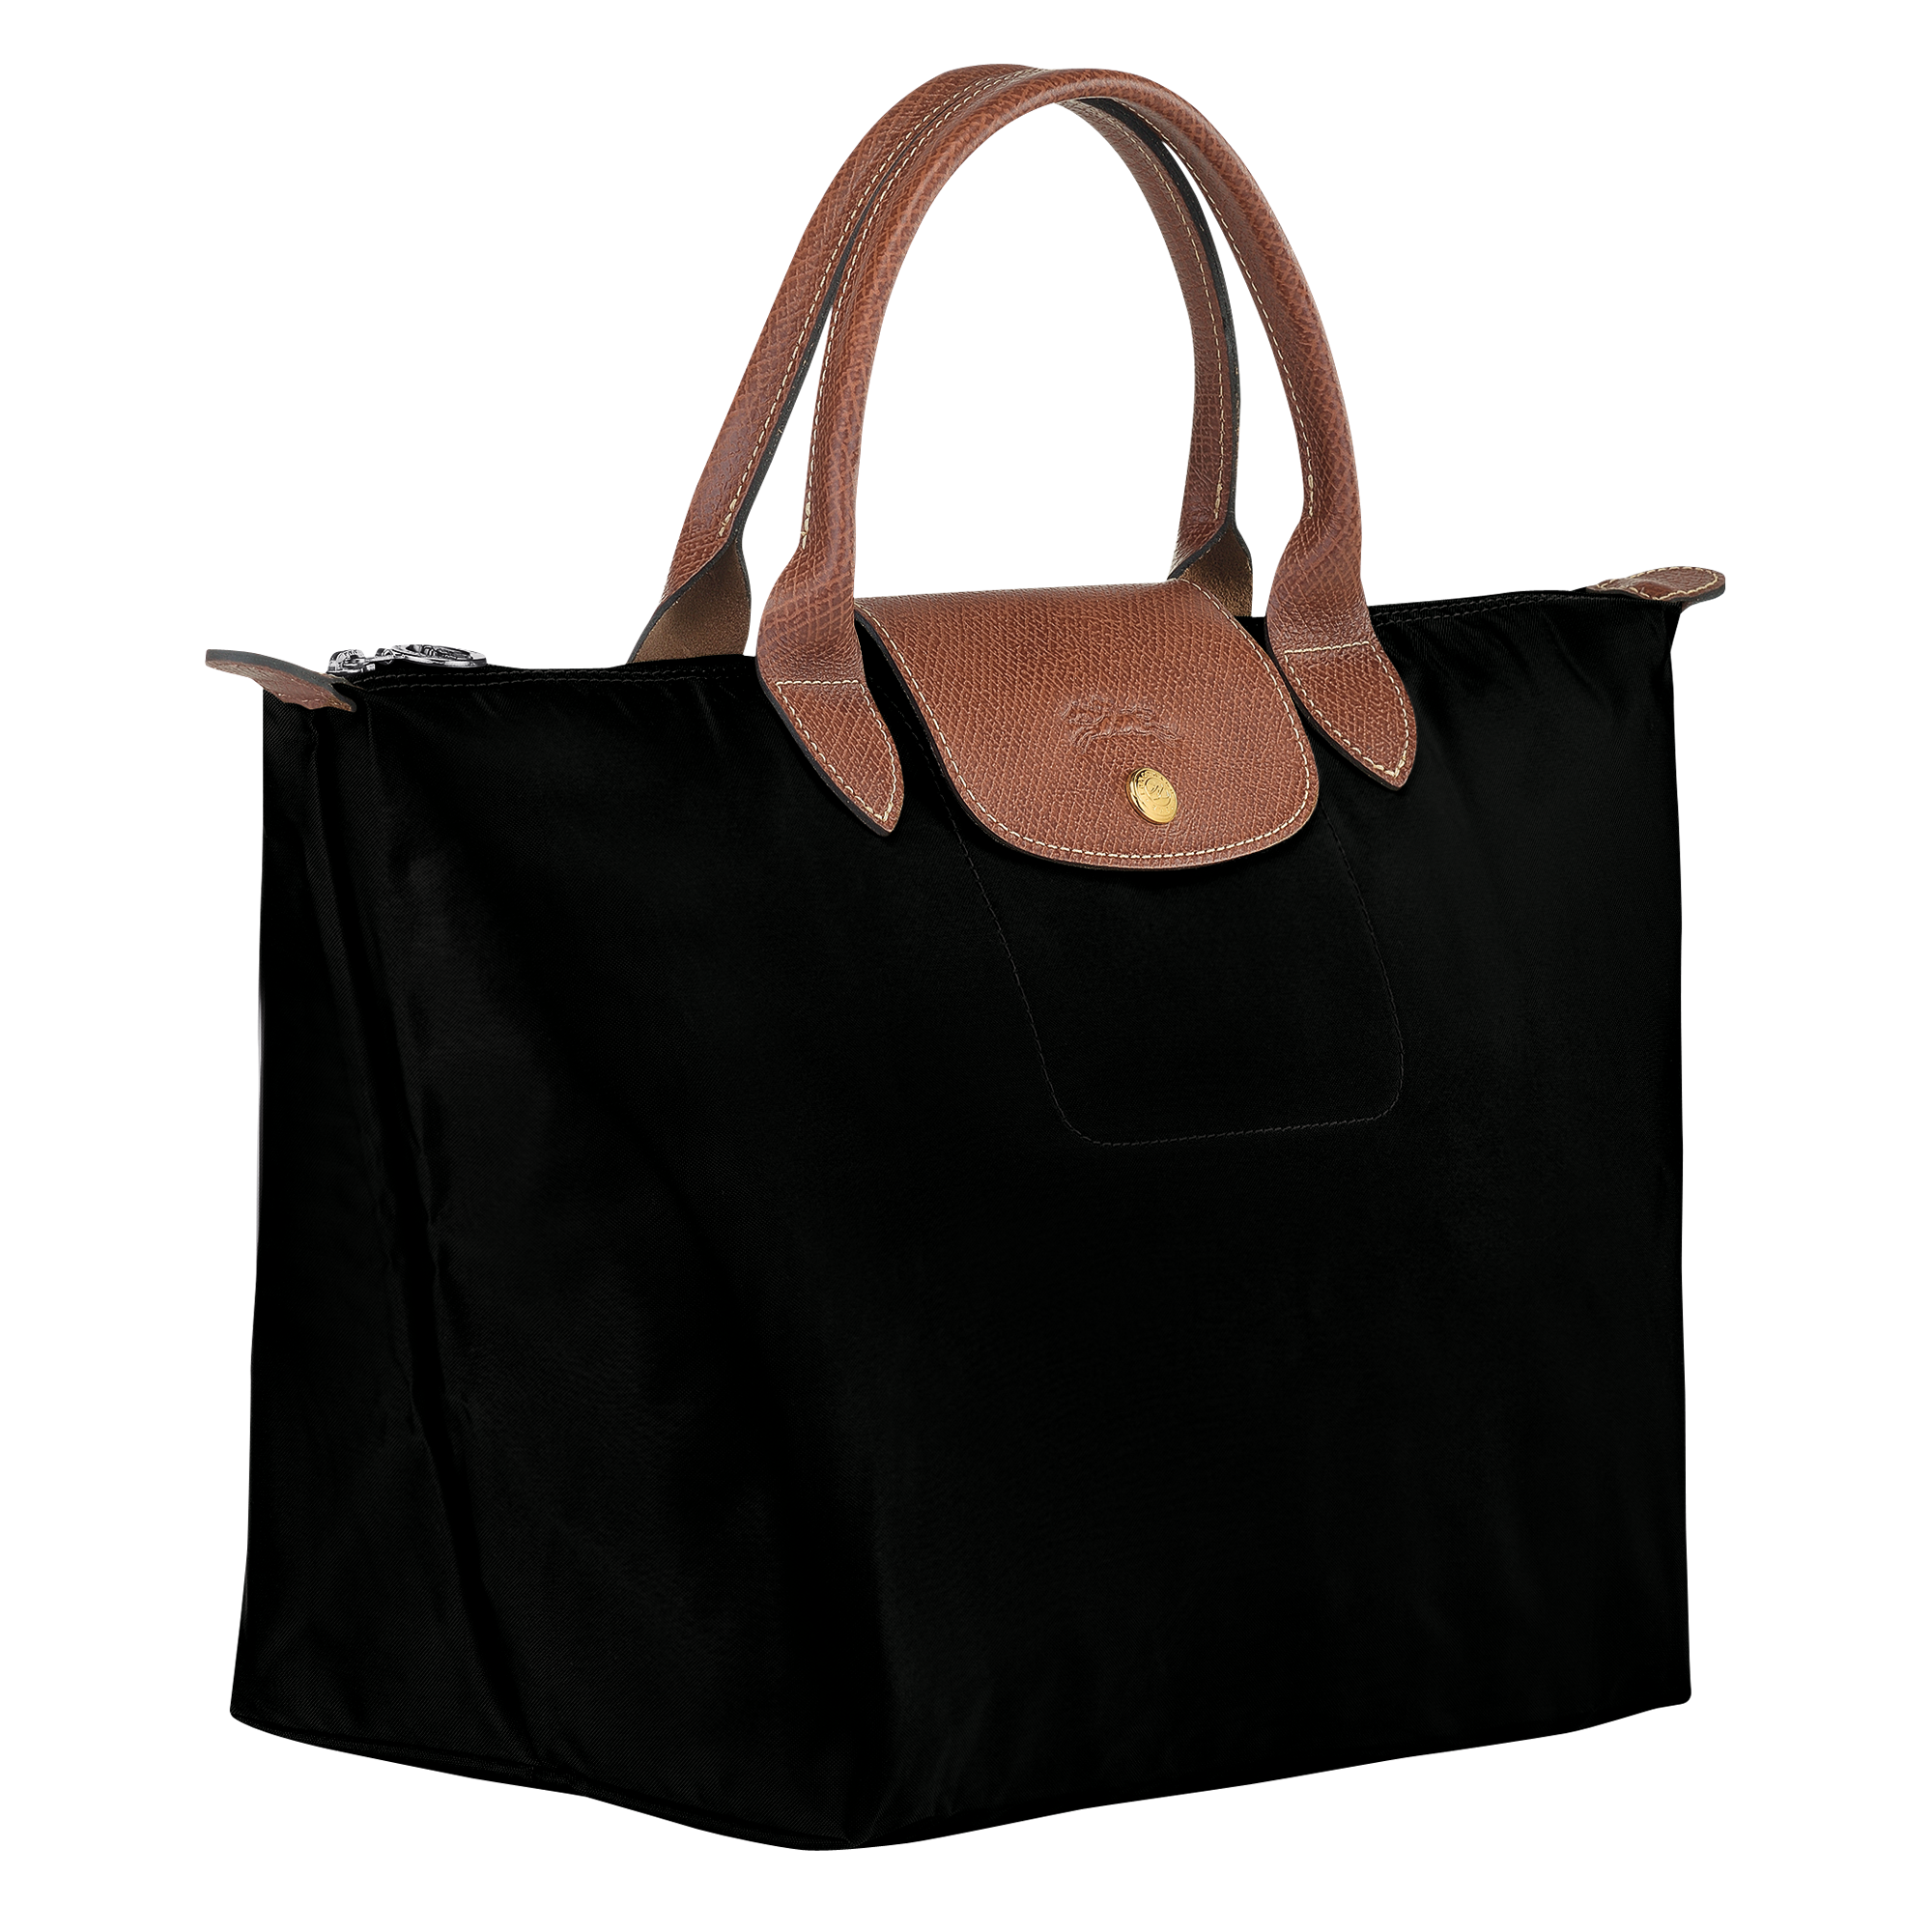 Le Pliage Original Handbag M, Black